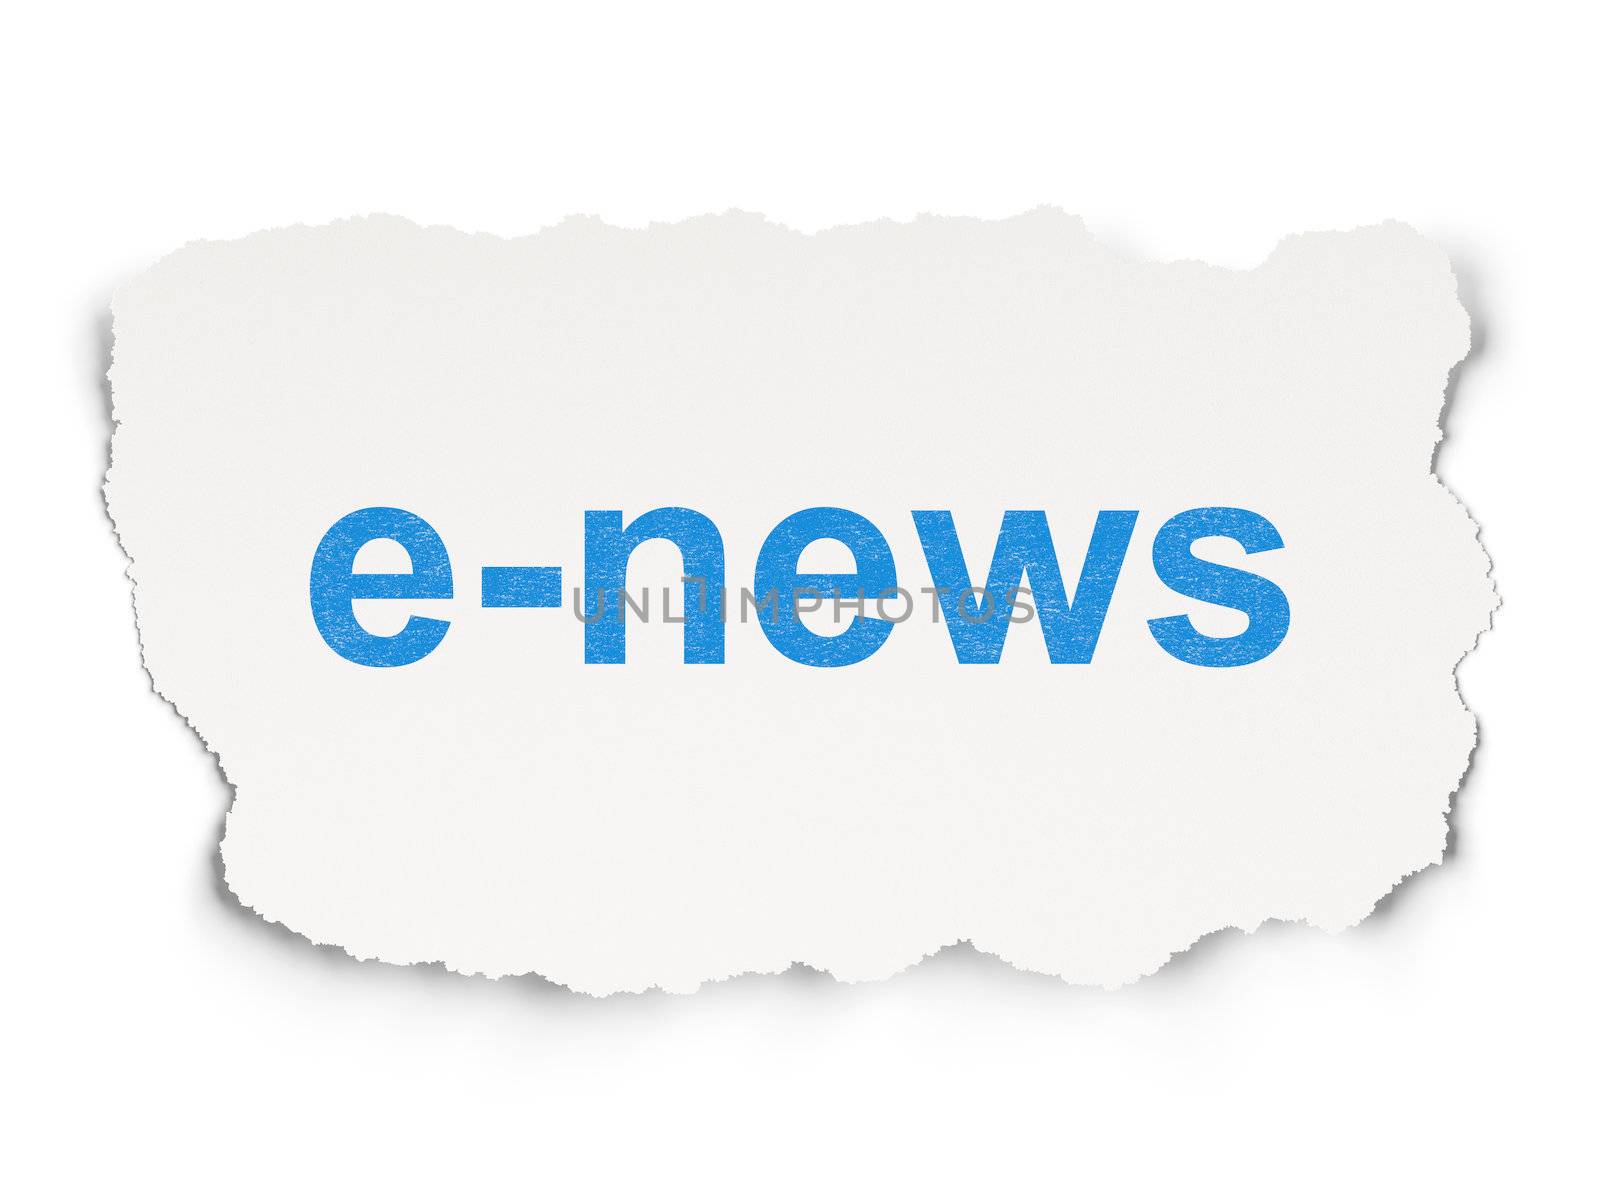 News concept: E-news on Paper background by maxkabakov